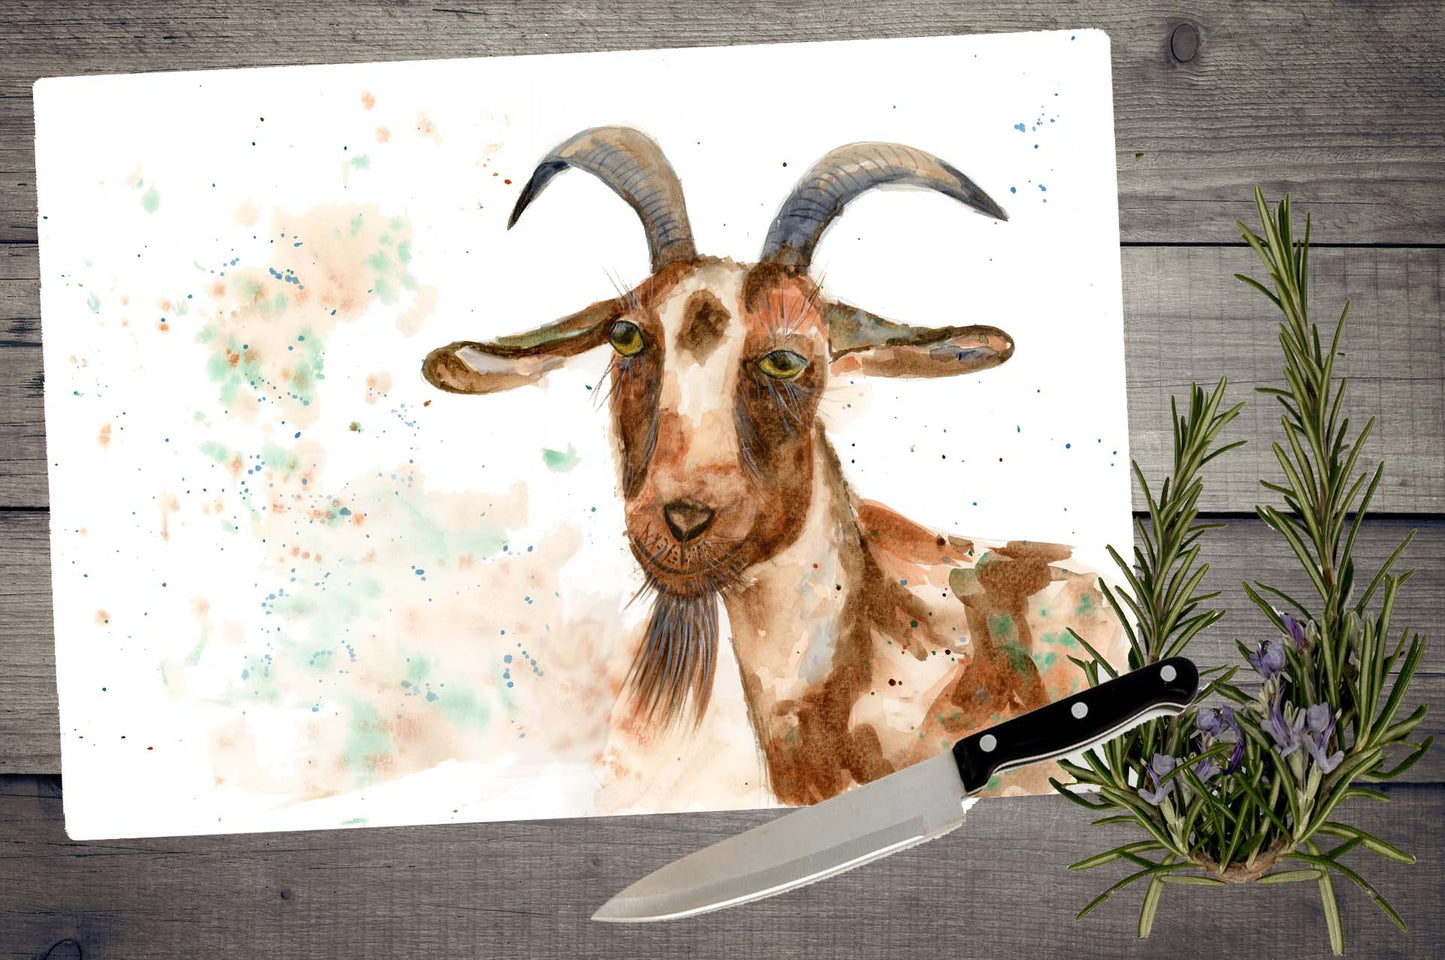 Goat chopping board / Worktop saver